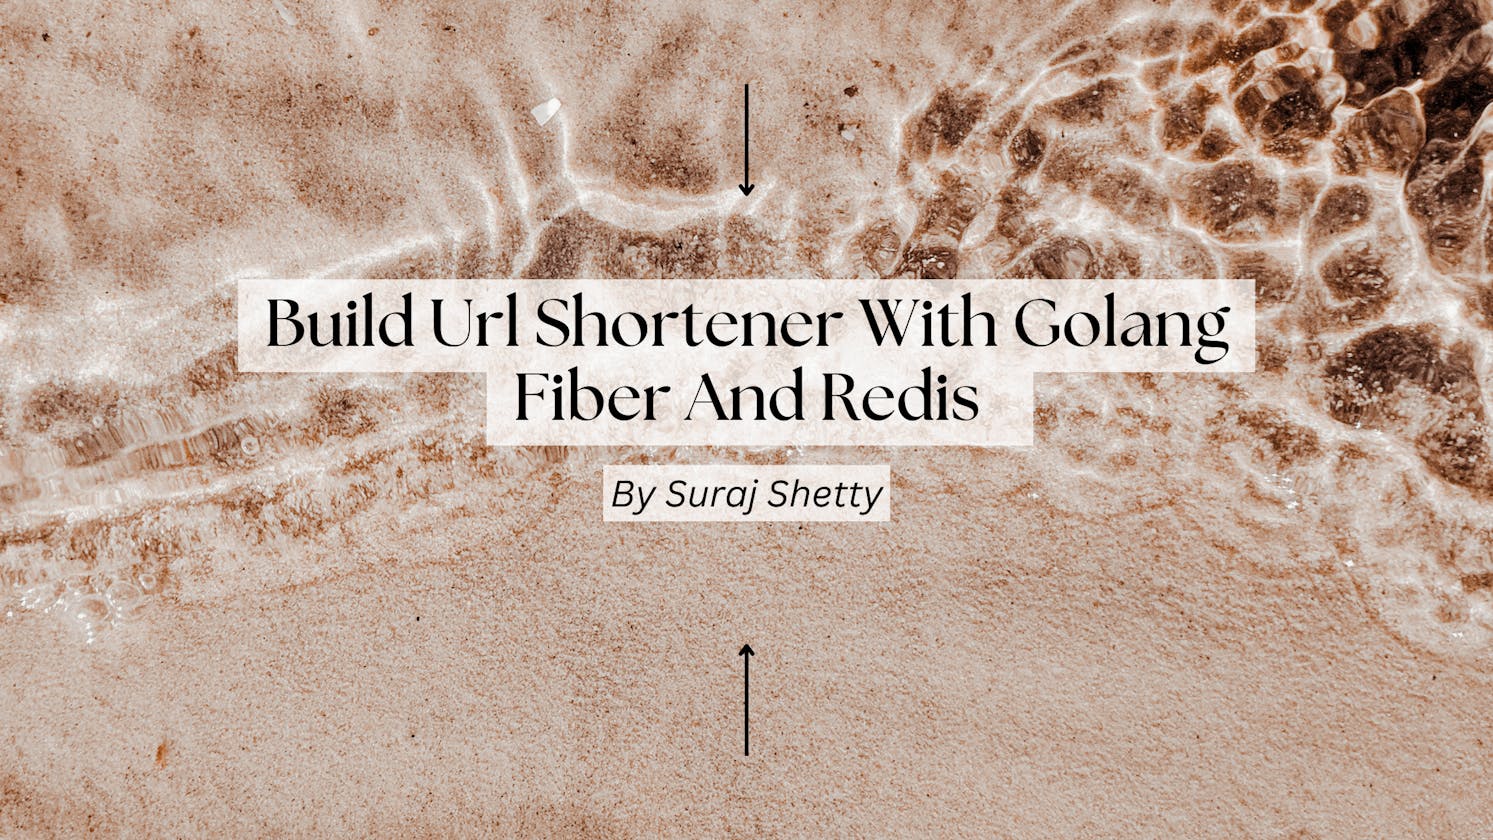 Build a URL Shortener with Go Fiber and Redis